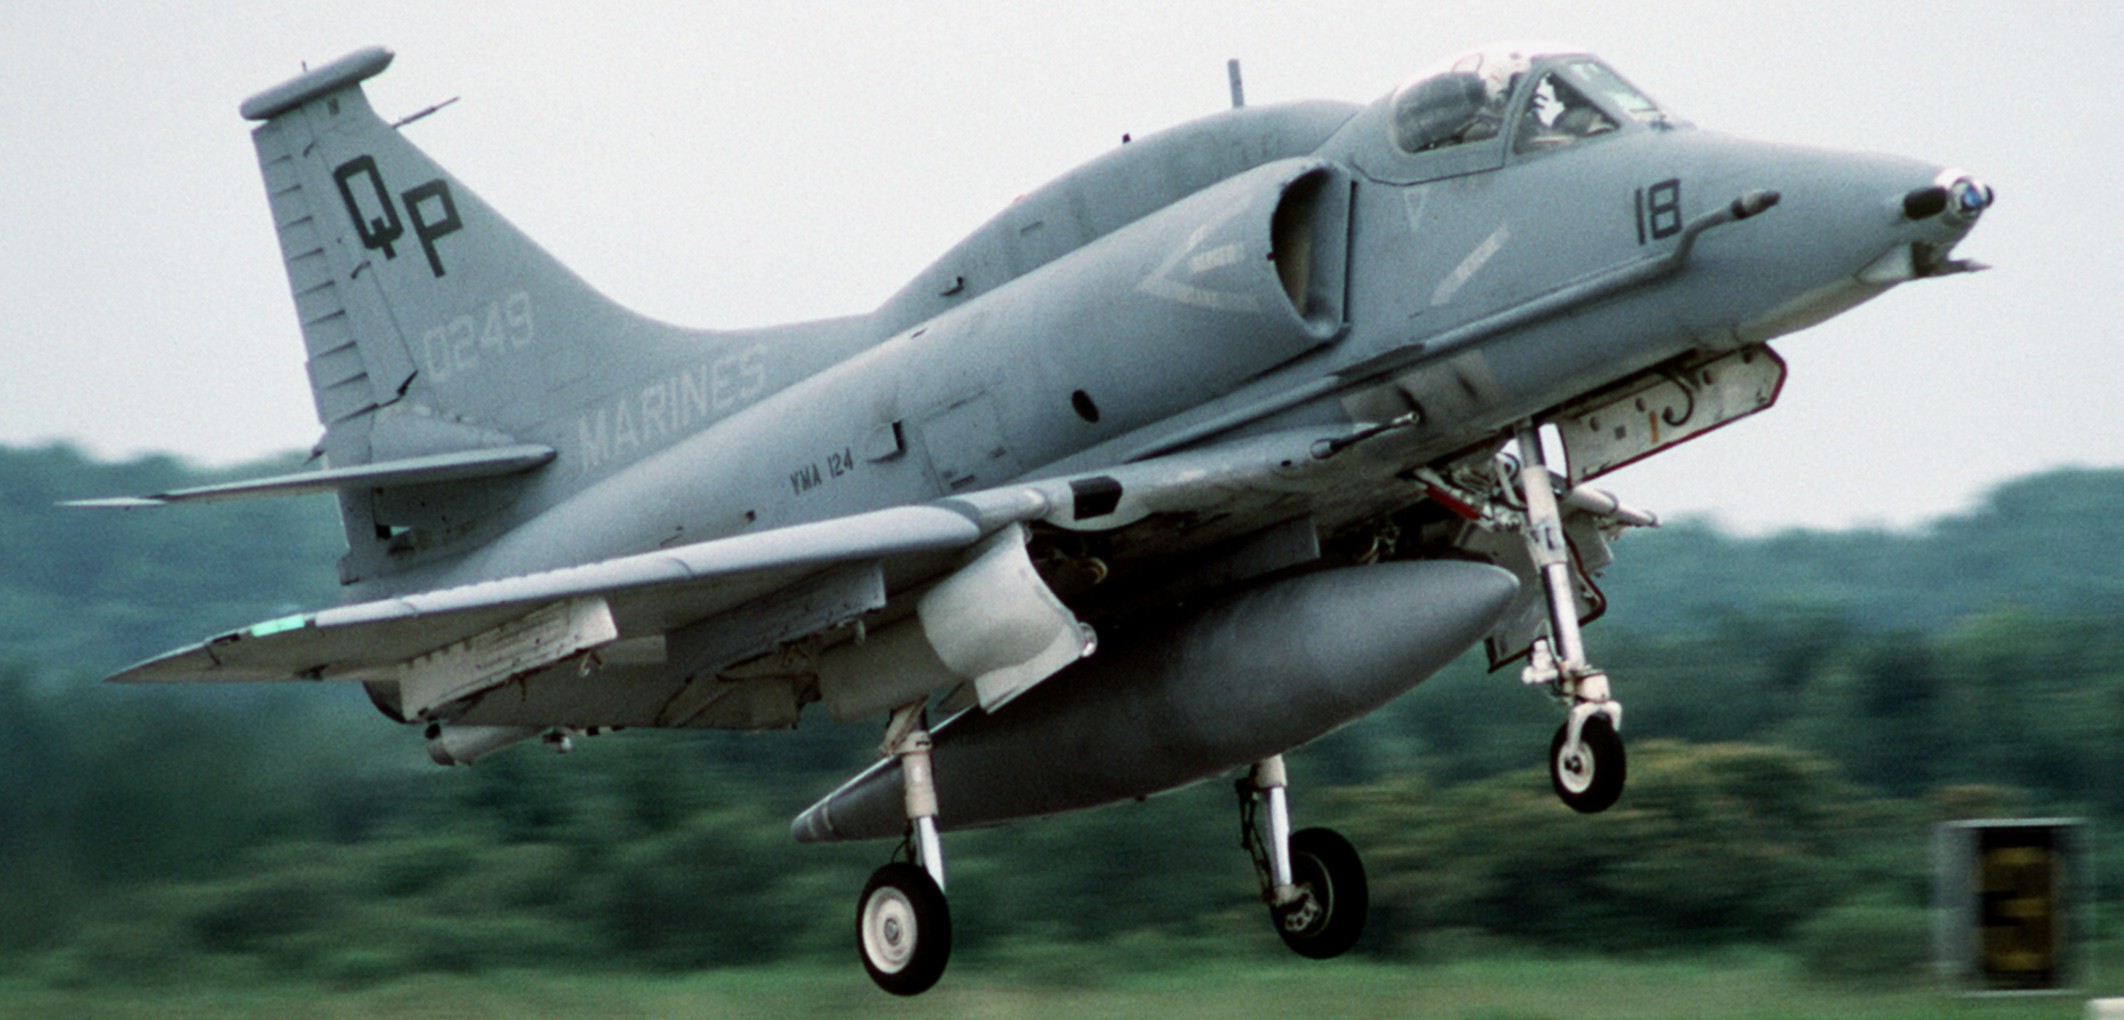 vma-124 whistling death wild aces a-4m skyhawk usmc marines 03